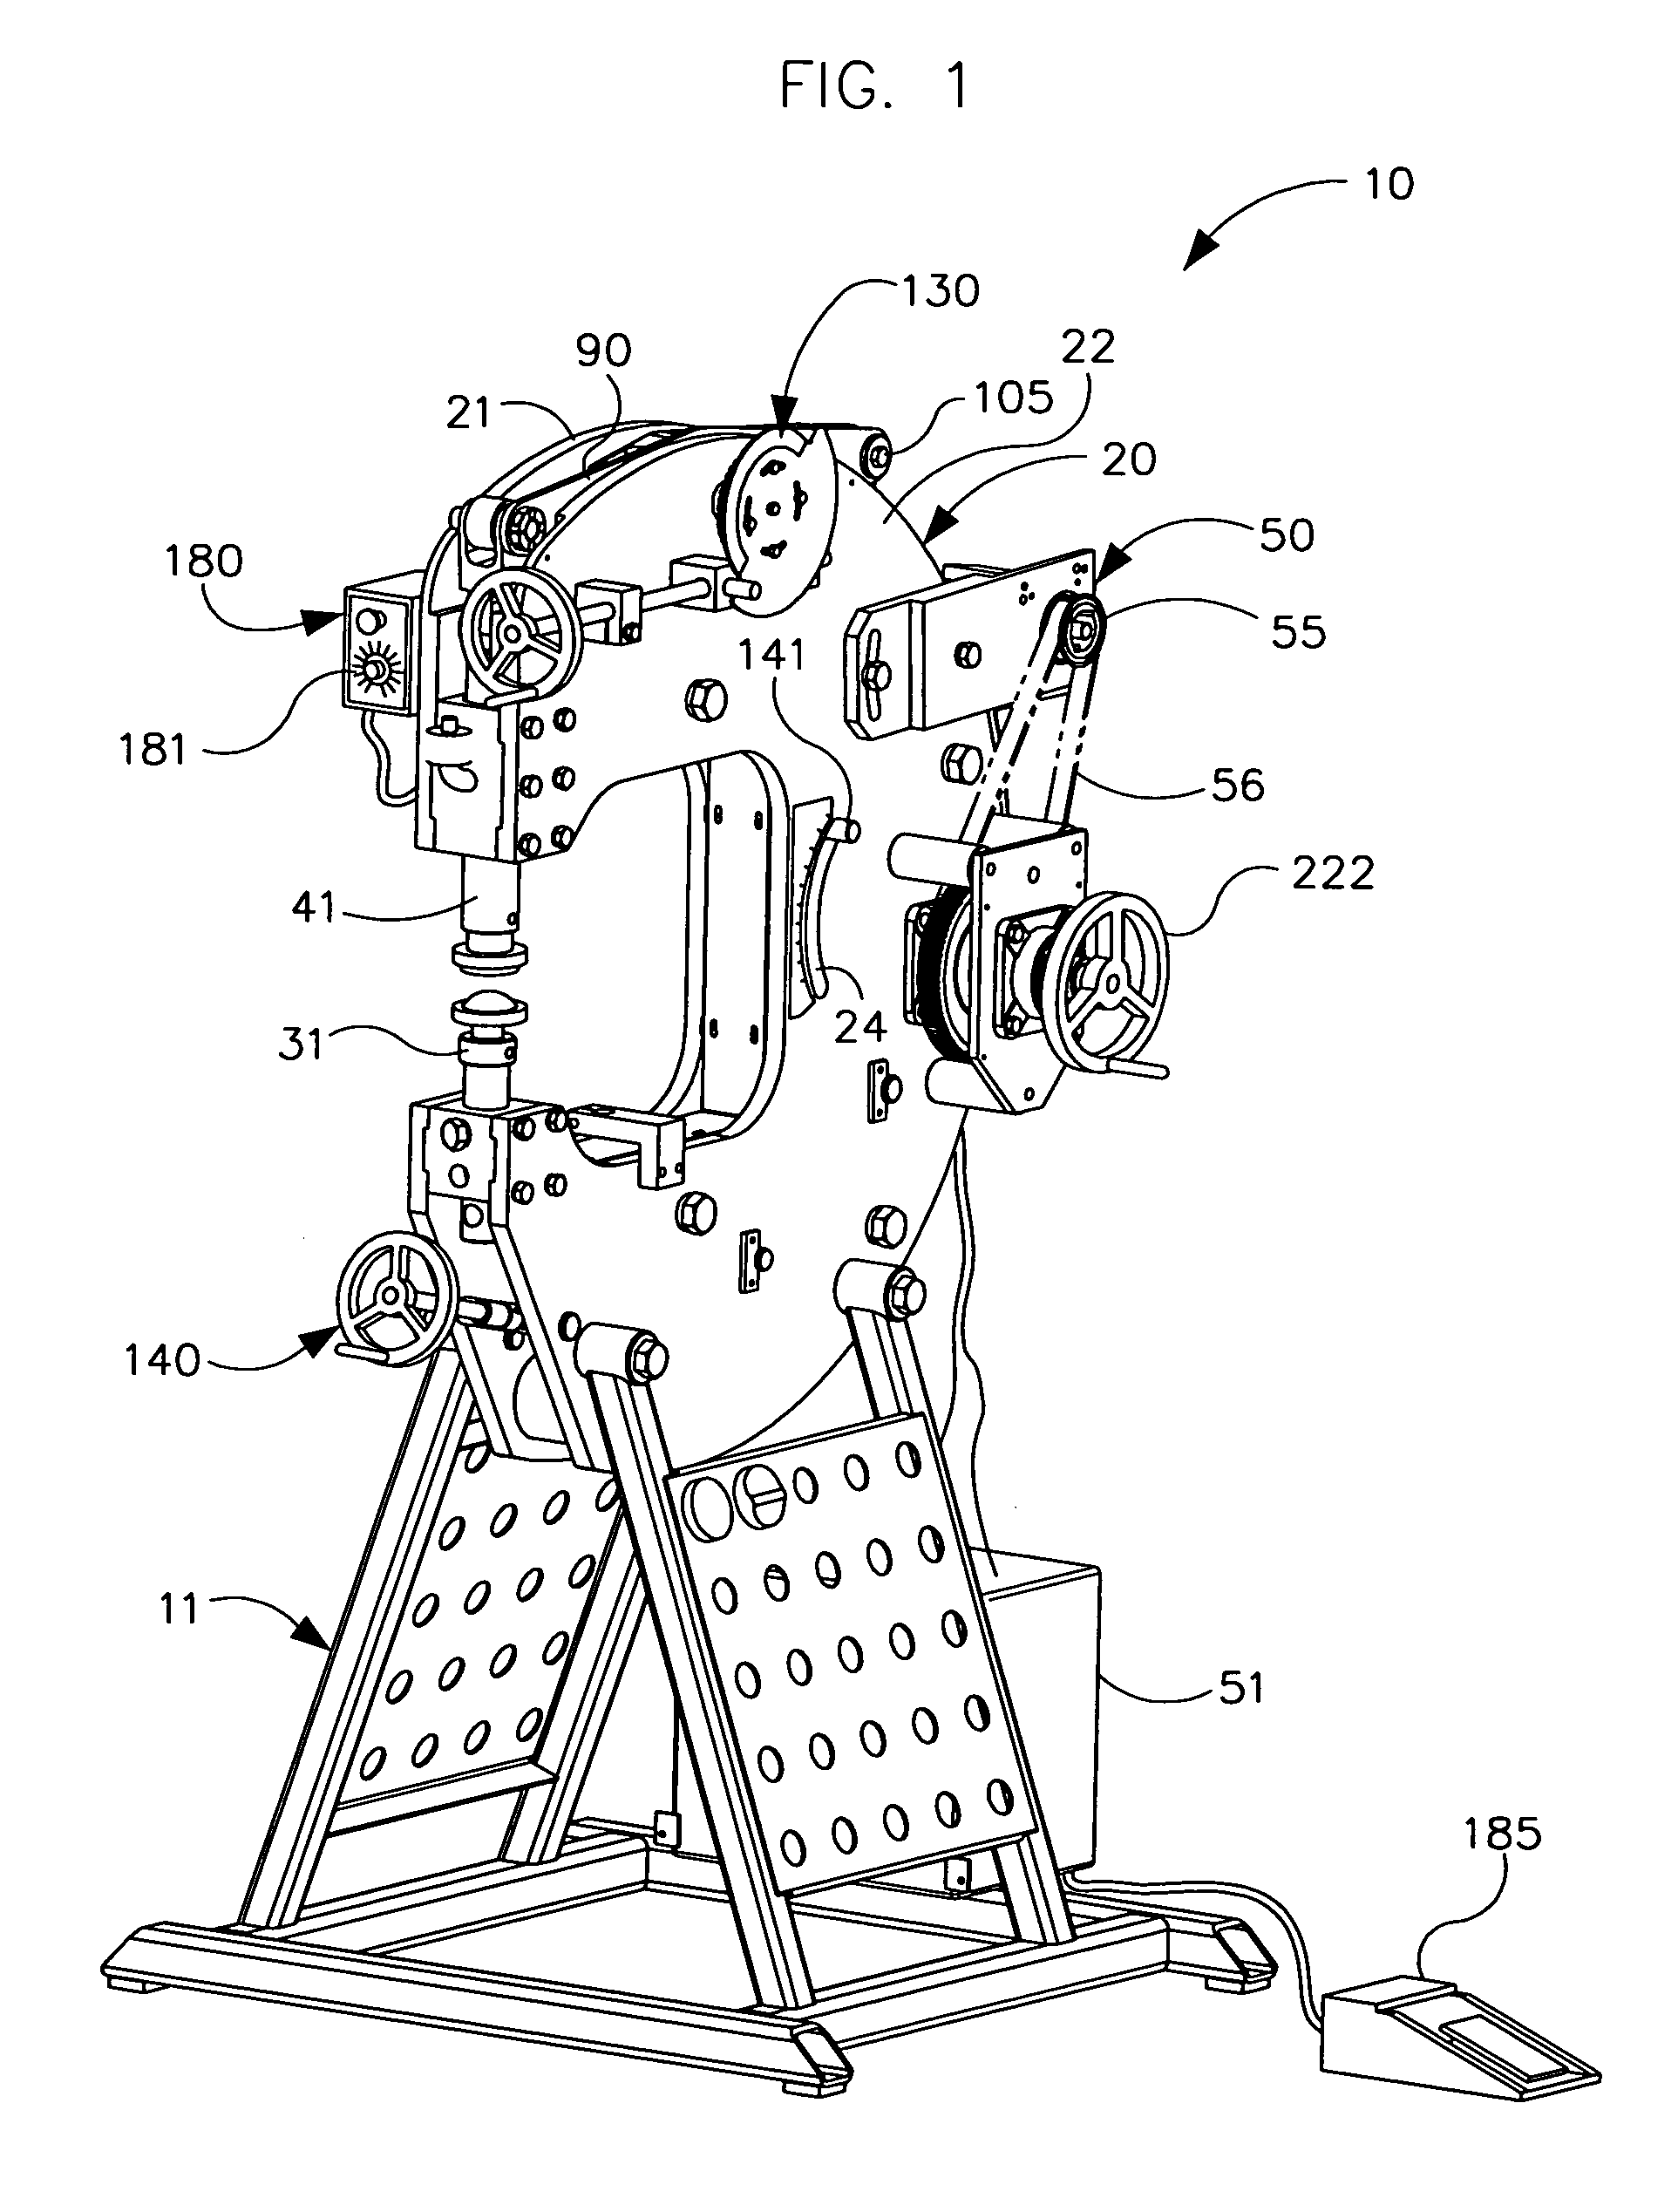 Multi-mode hammering machine